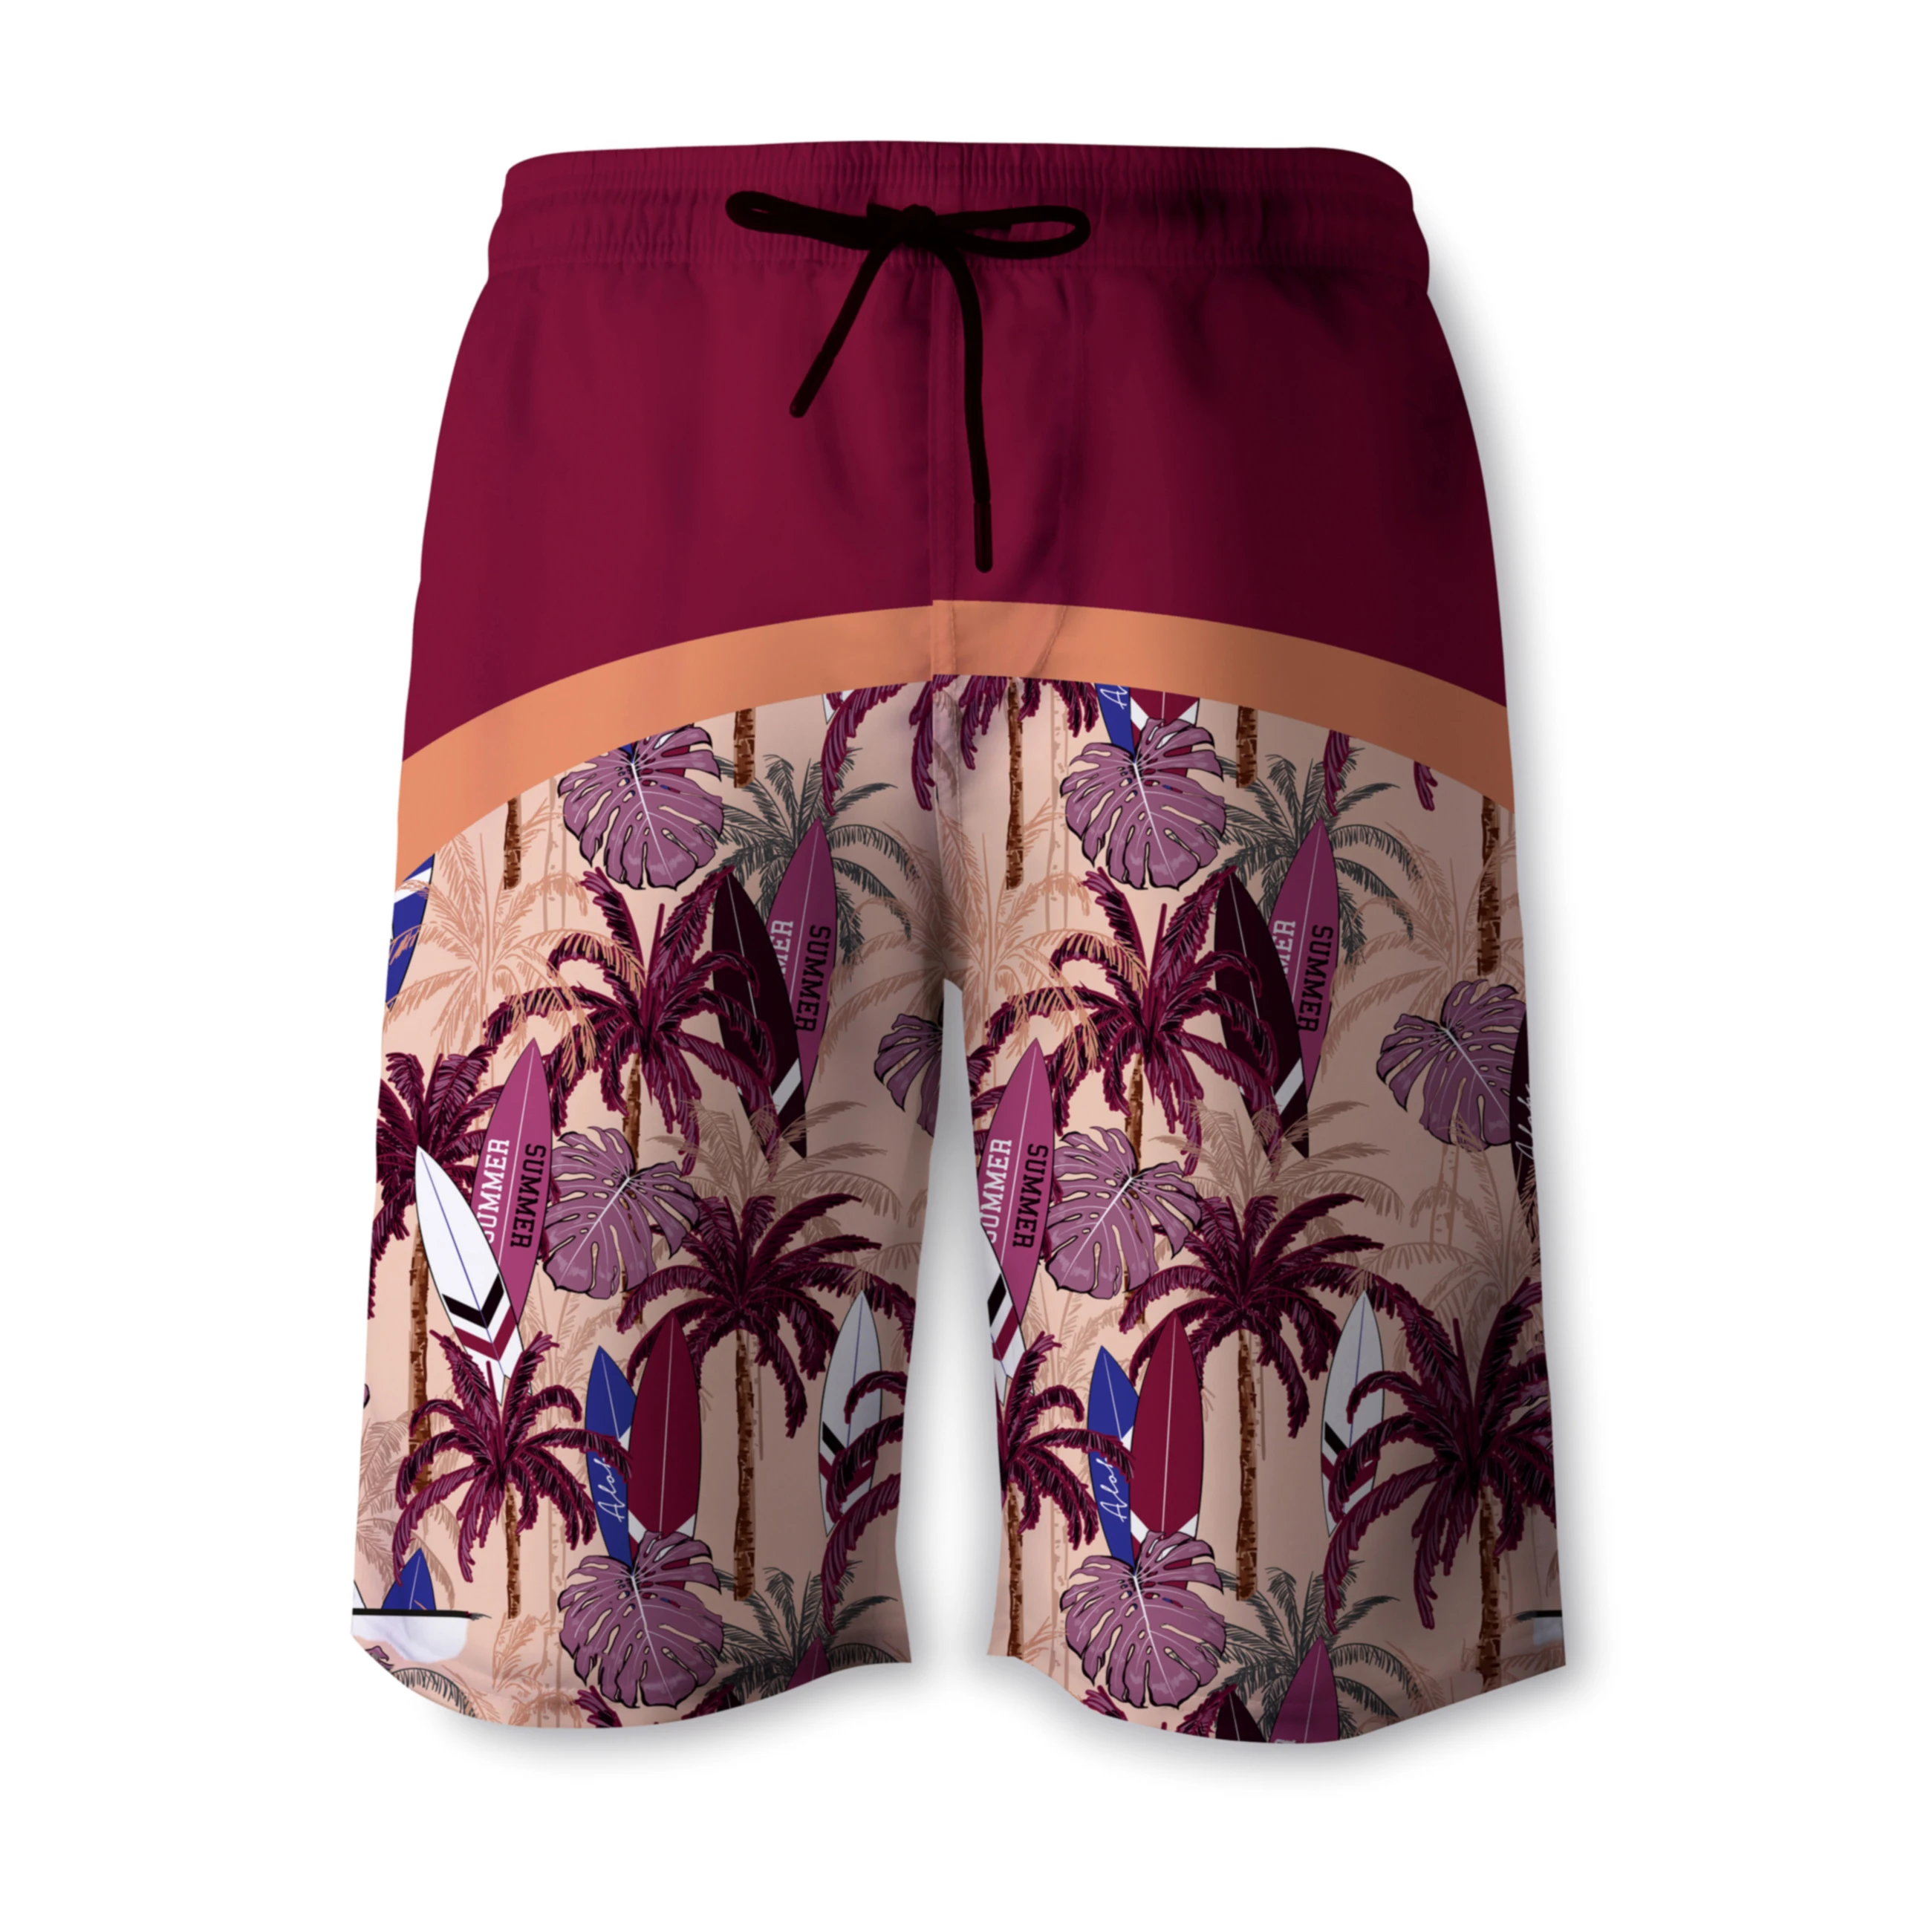 

2021 designer famous brands custom logo quick dry swimming shorts fashion beach shorts swim trunks for men, Printed brilliantly